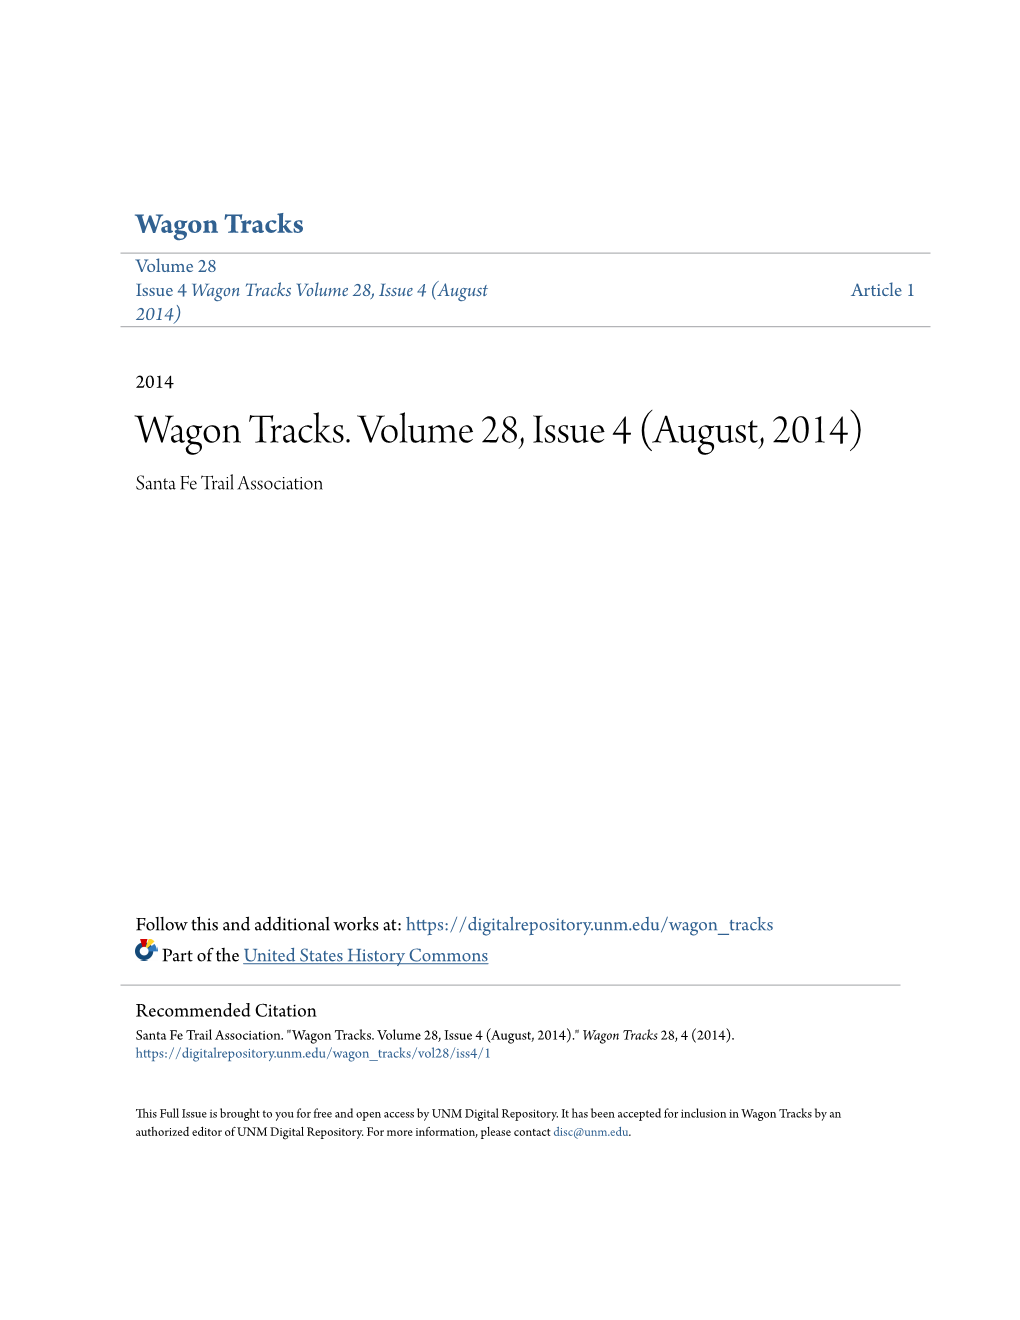 Wagon Tracks. Volume 28, Issue 4 (August, 2014) Santa Fe Trail Association